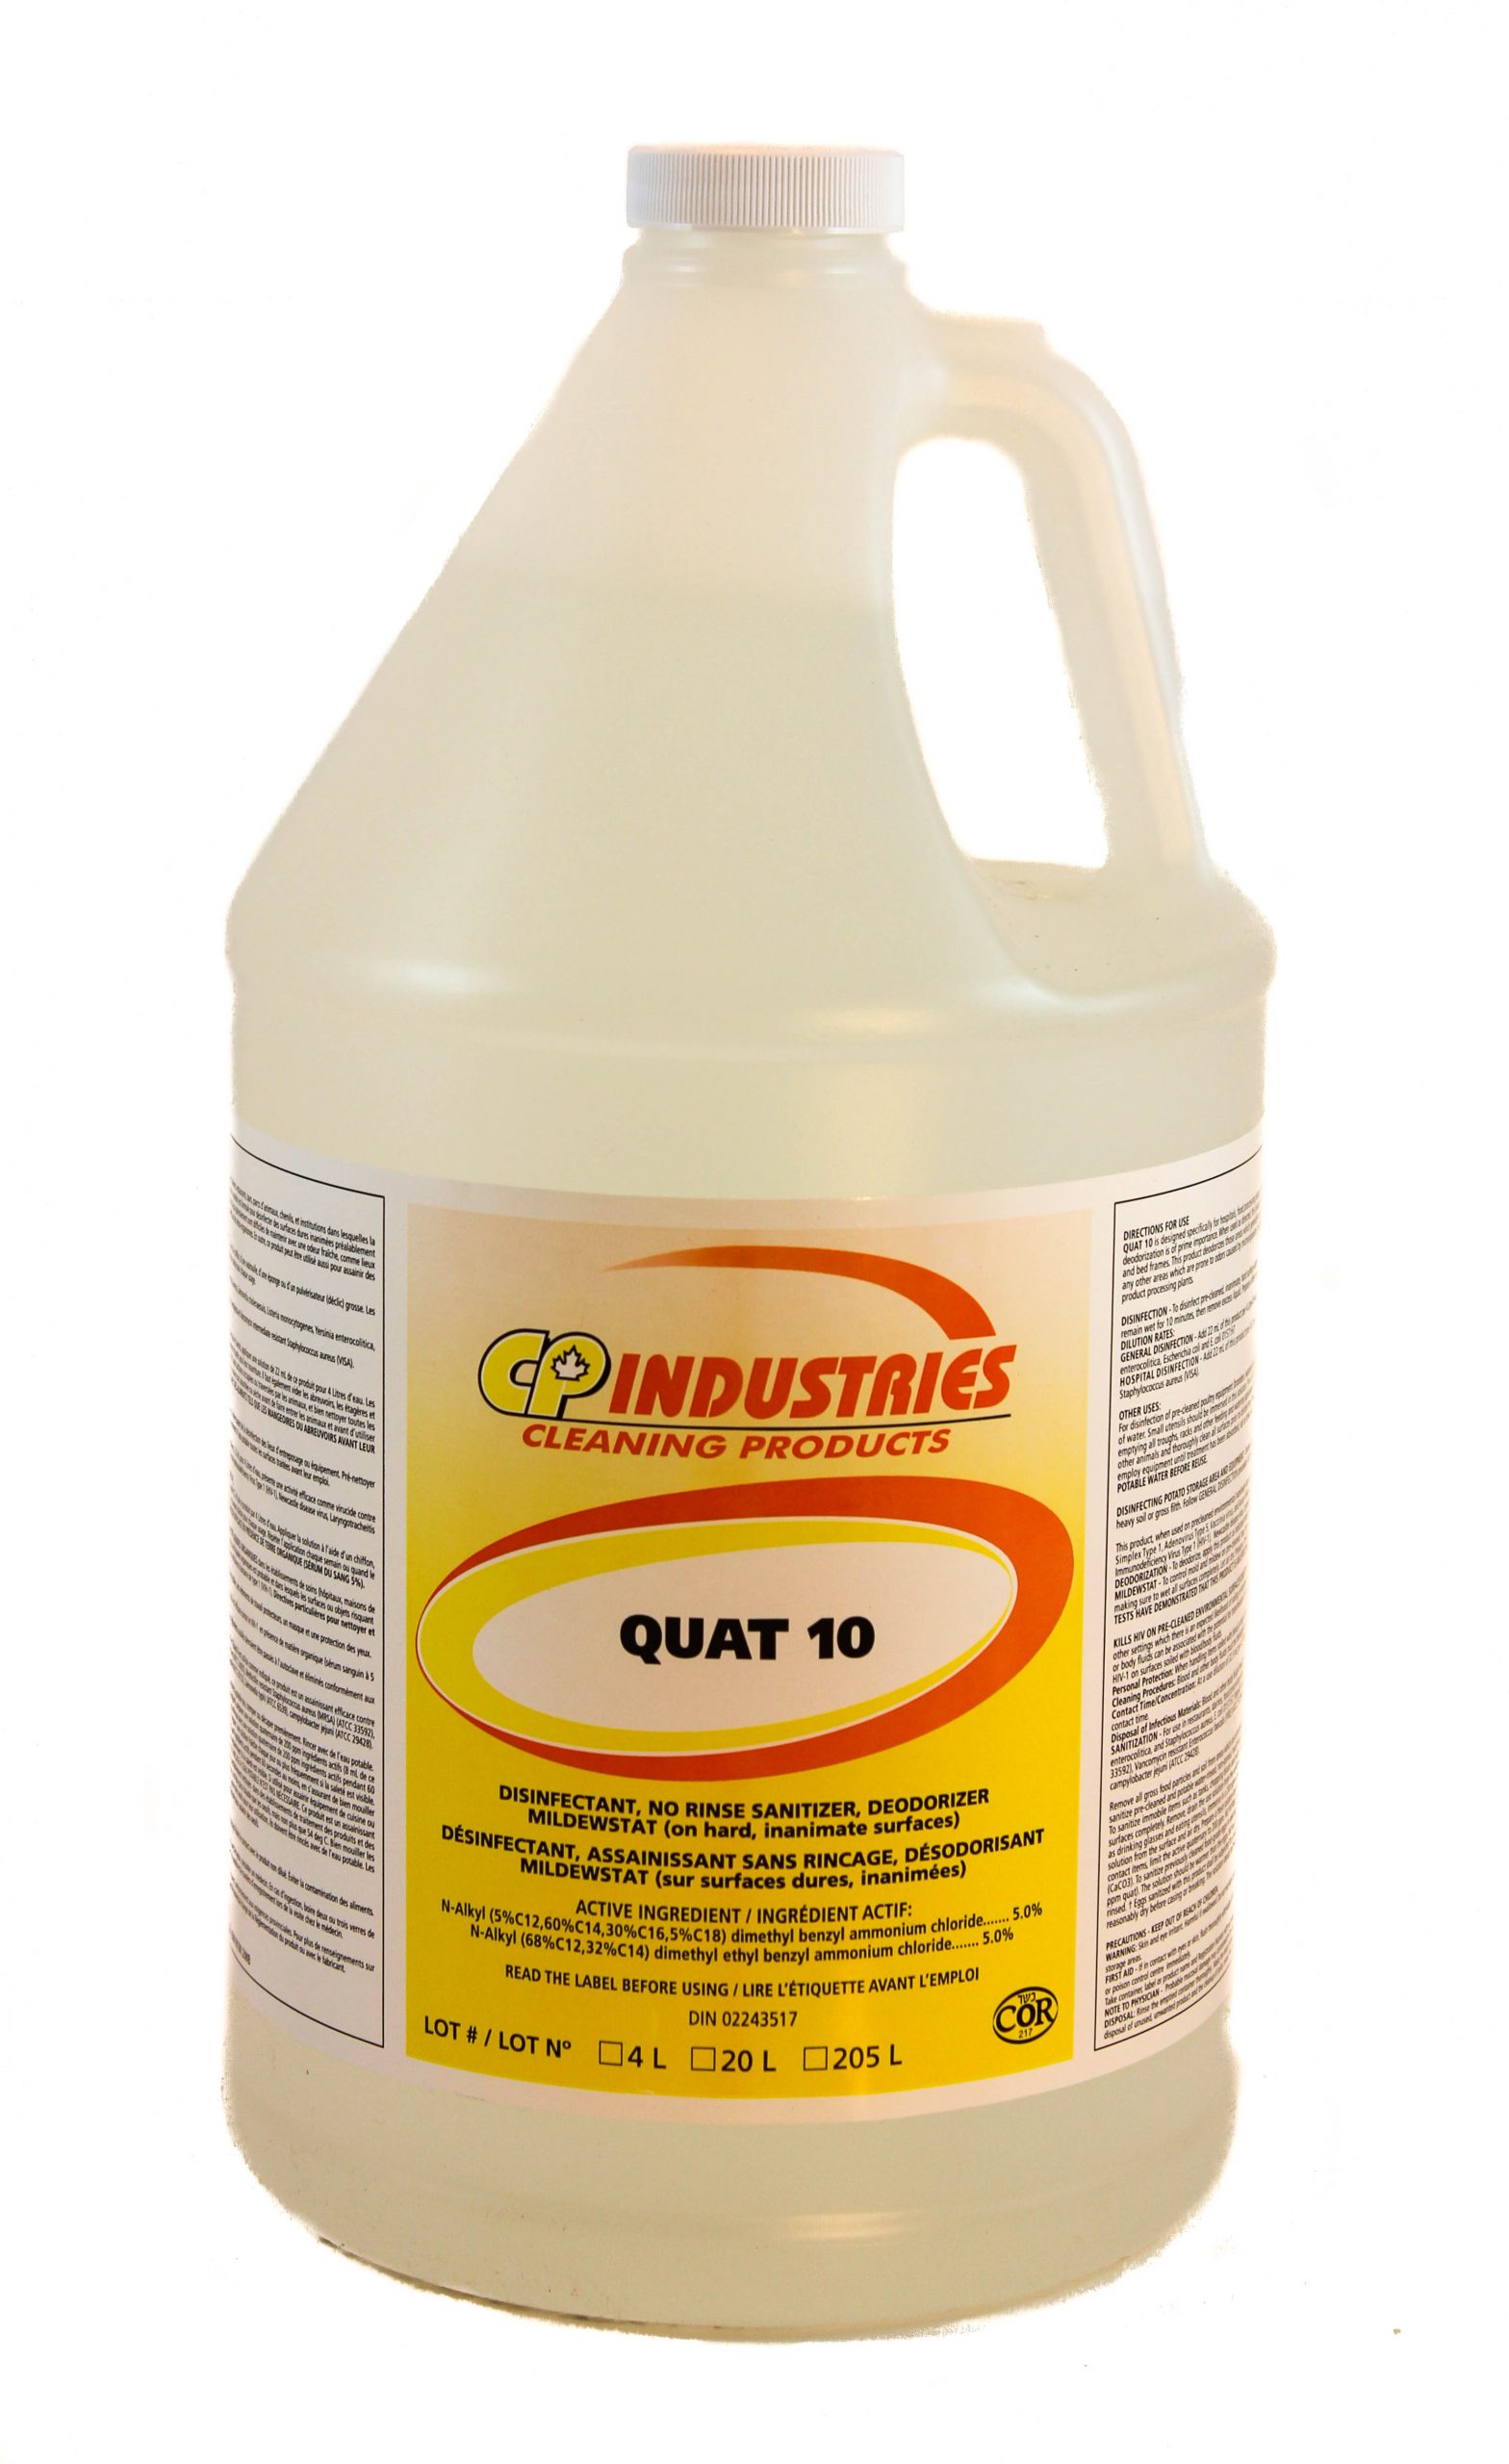 CP Industries Quat 10 - disinfectant and sanitizer